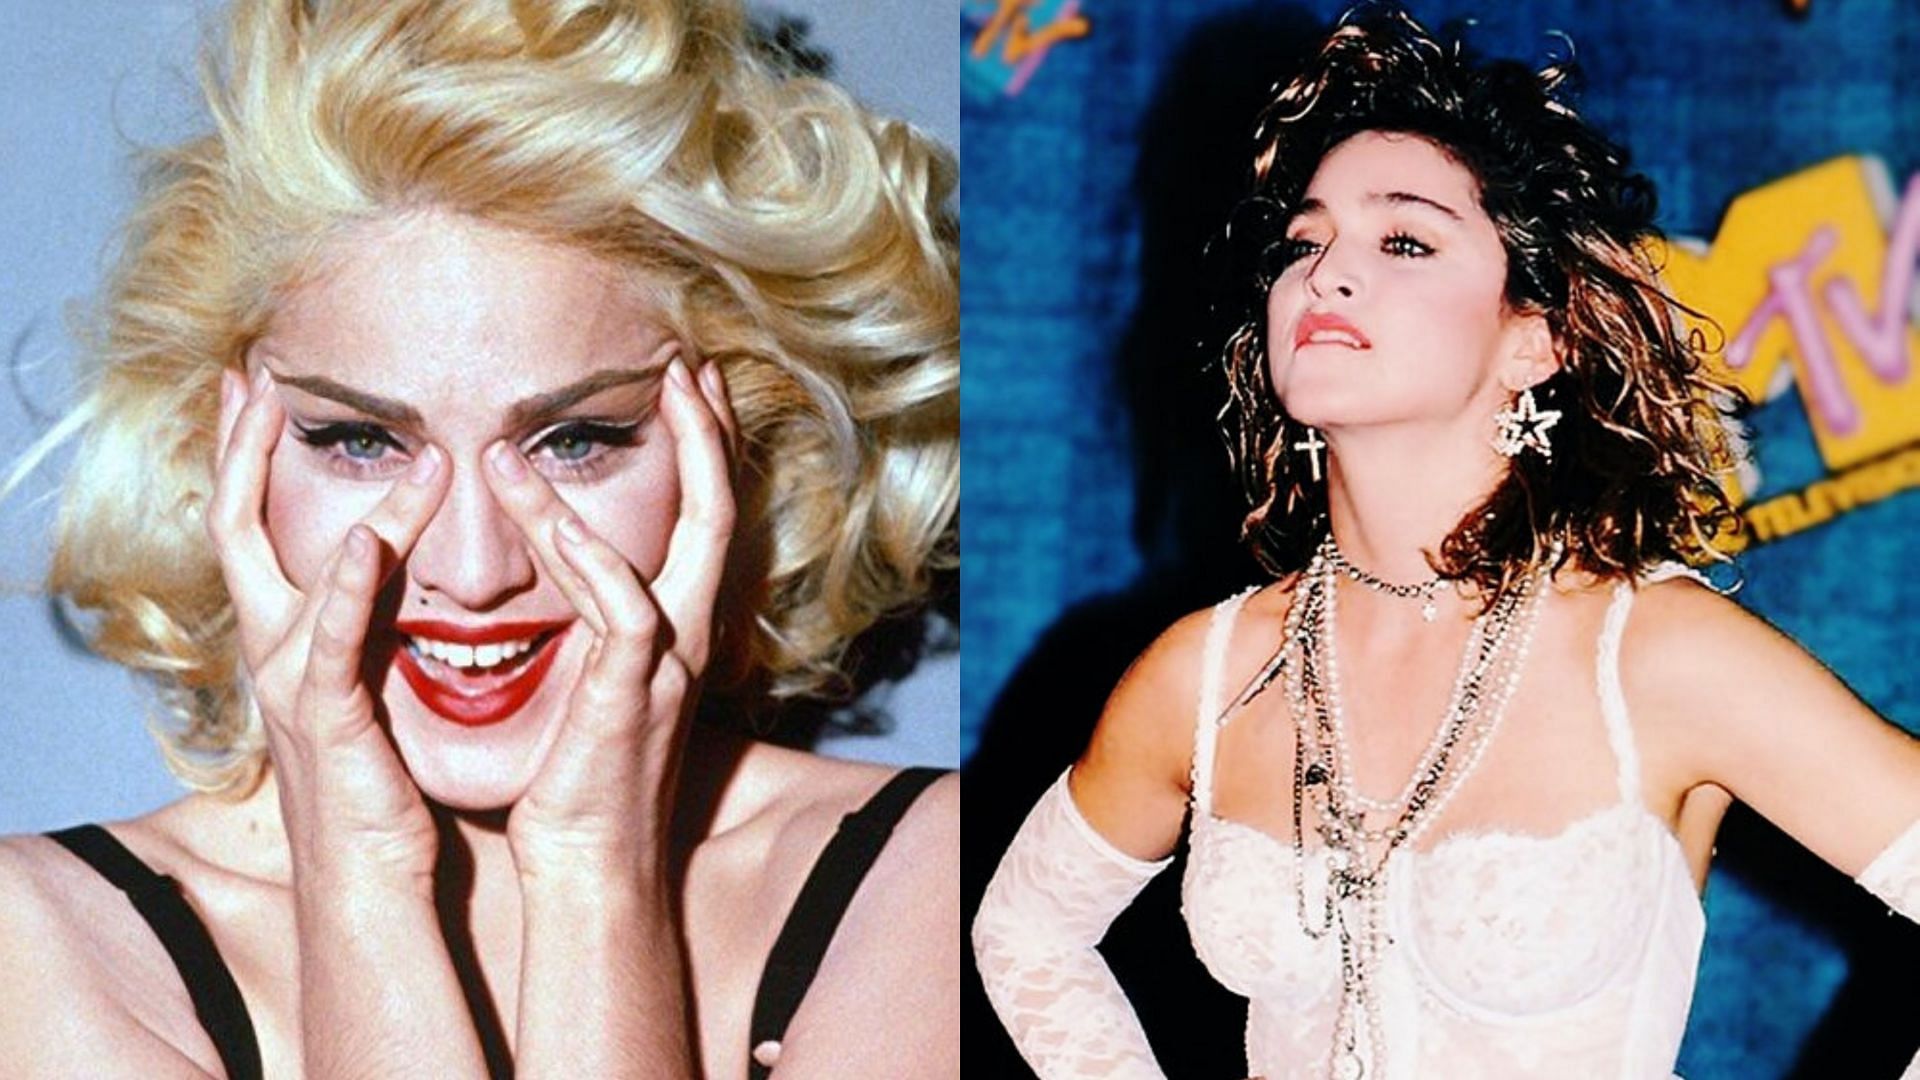 A WWE legend seemingly had a crush on Madonna